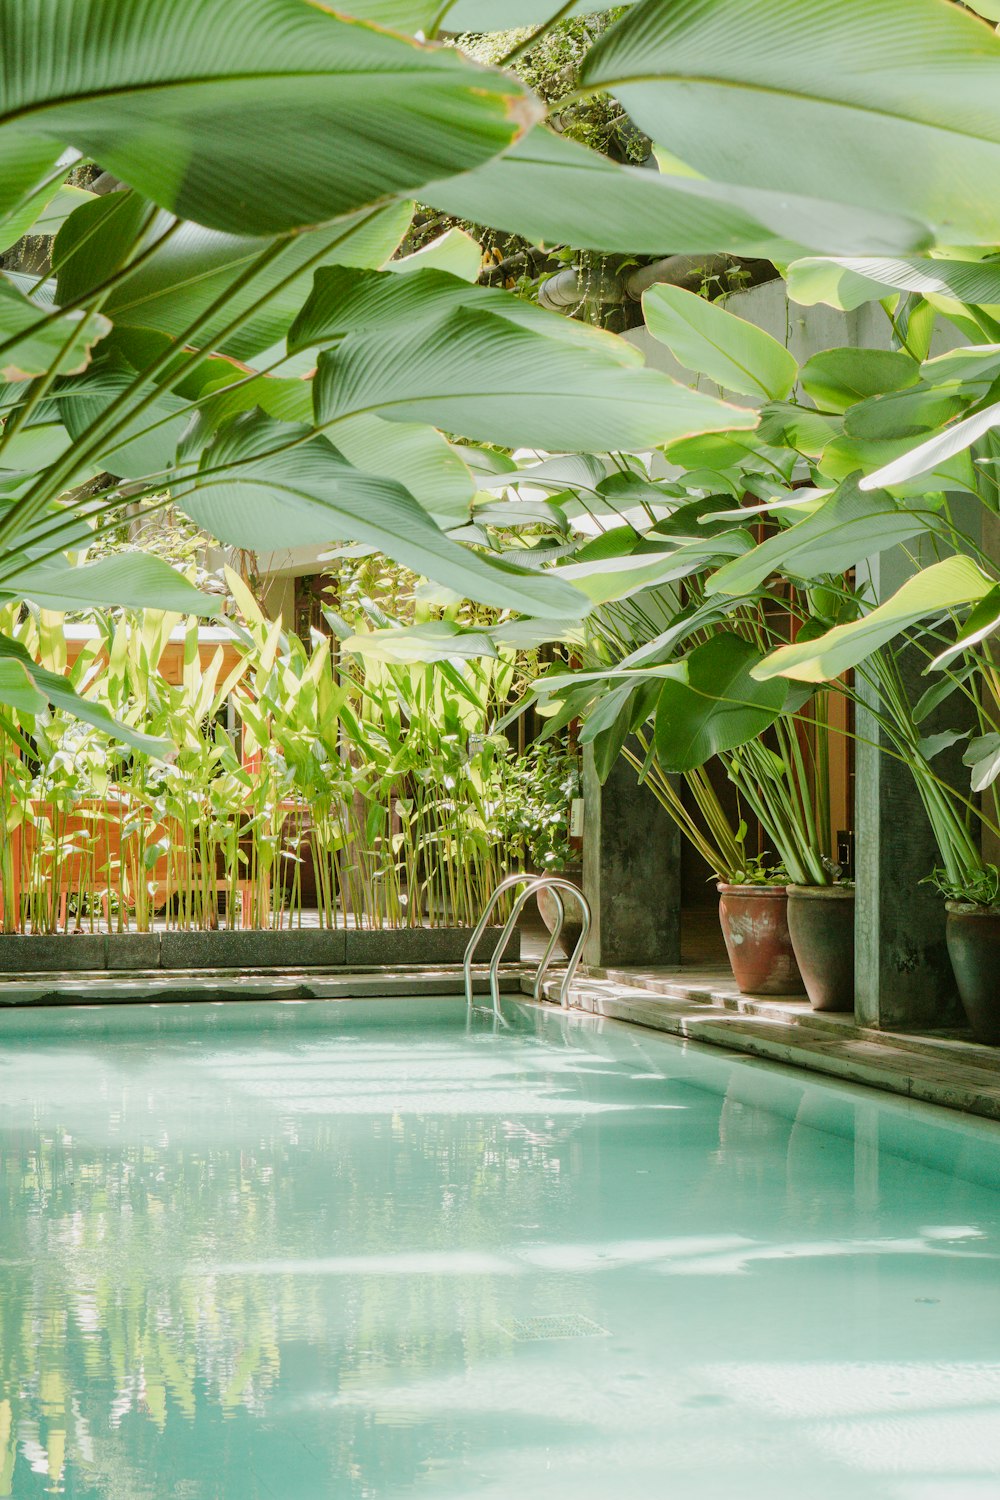 bananeira verde perto da piscina durante o dia